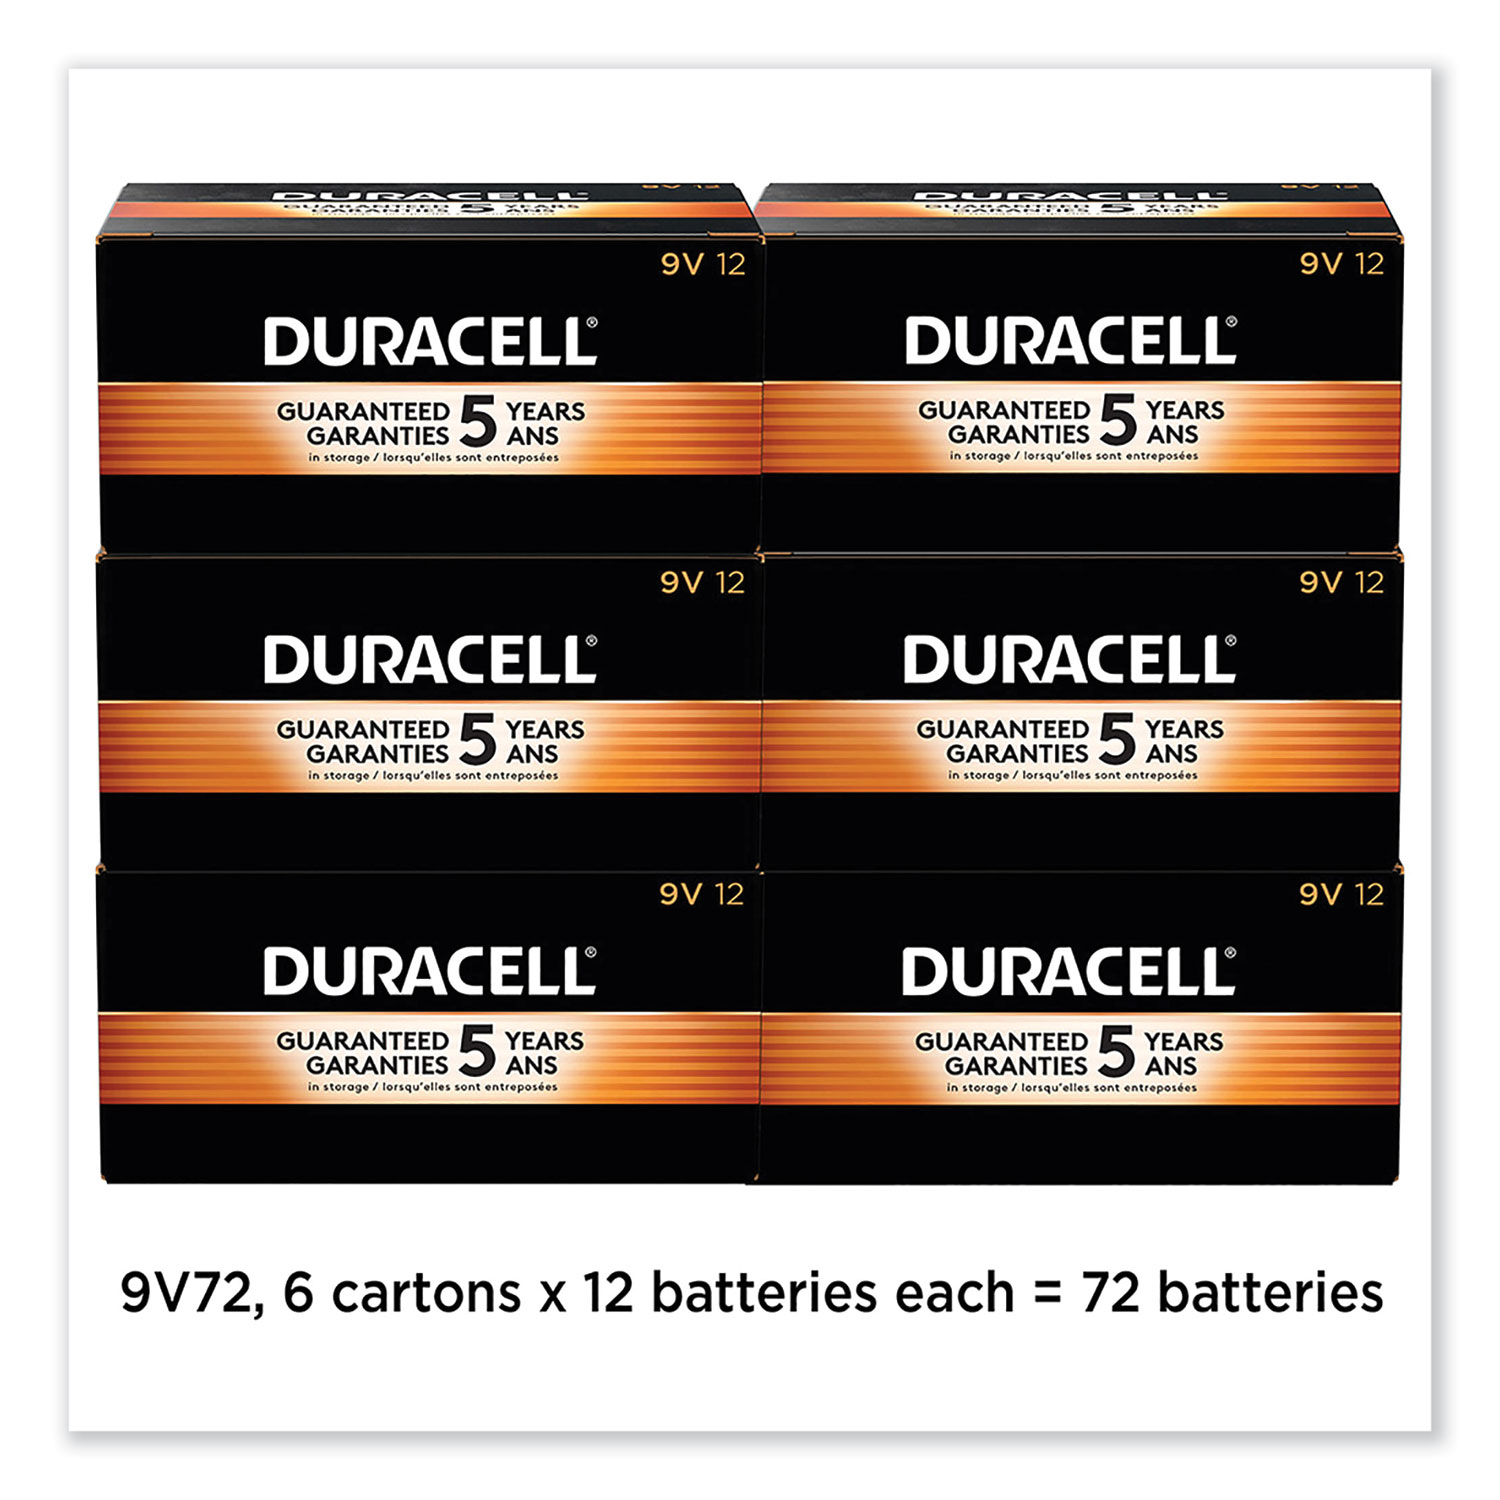 CopperTop Alkaline 9V Batteries, 72/Carton